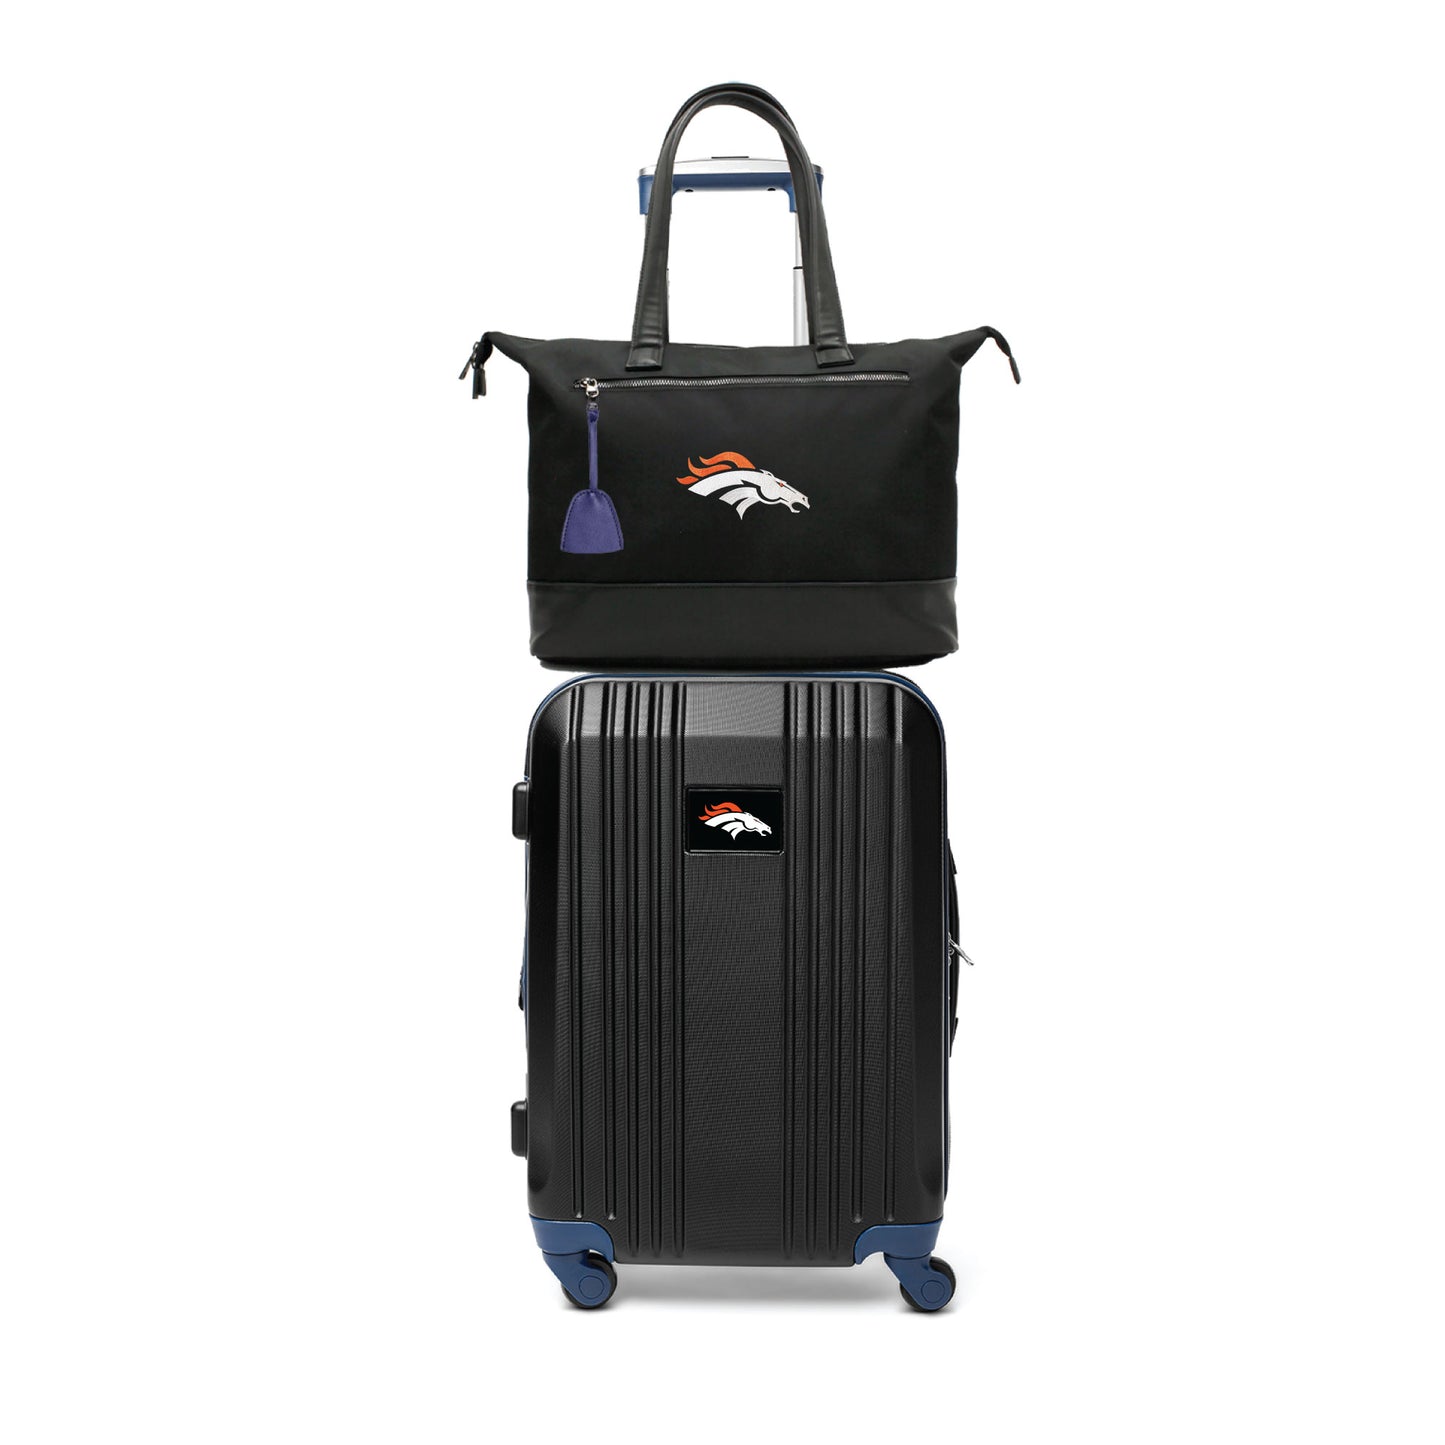 Denver Broncos Premium Laptop Tote Bag and Luggage Set